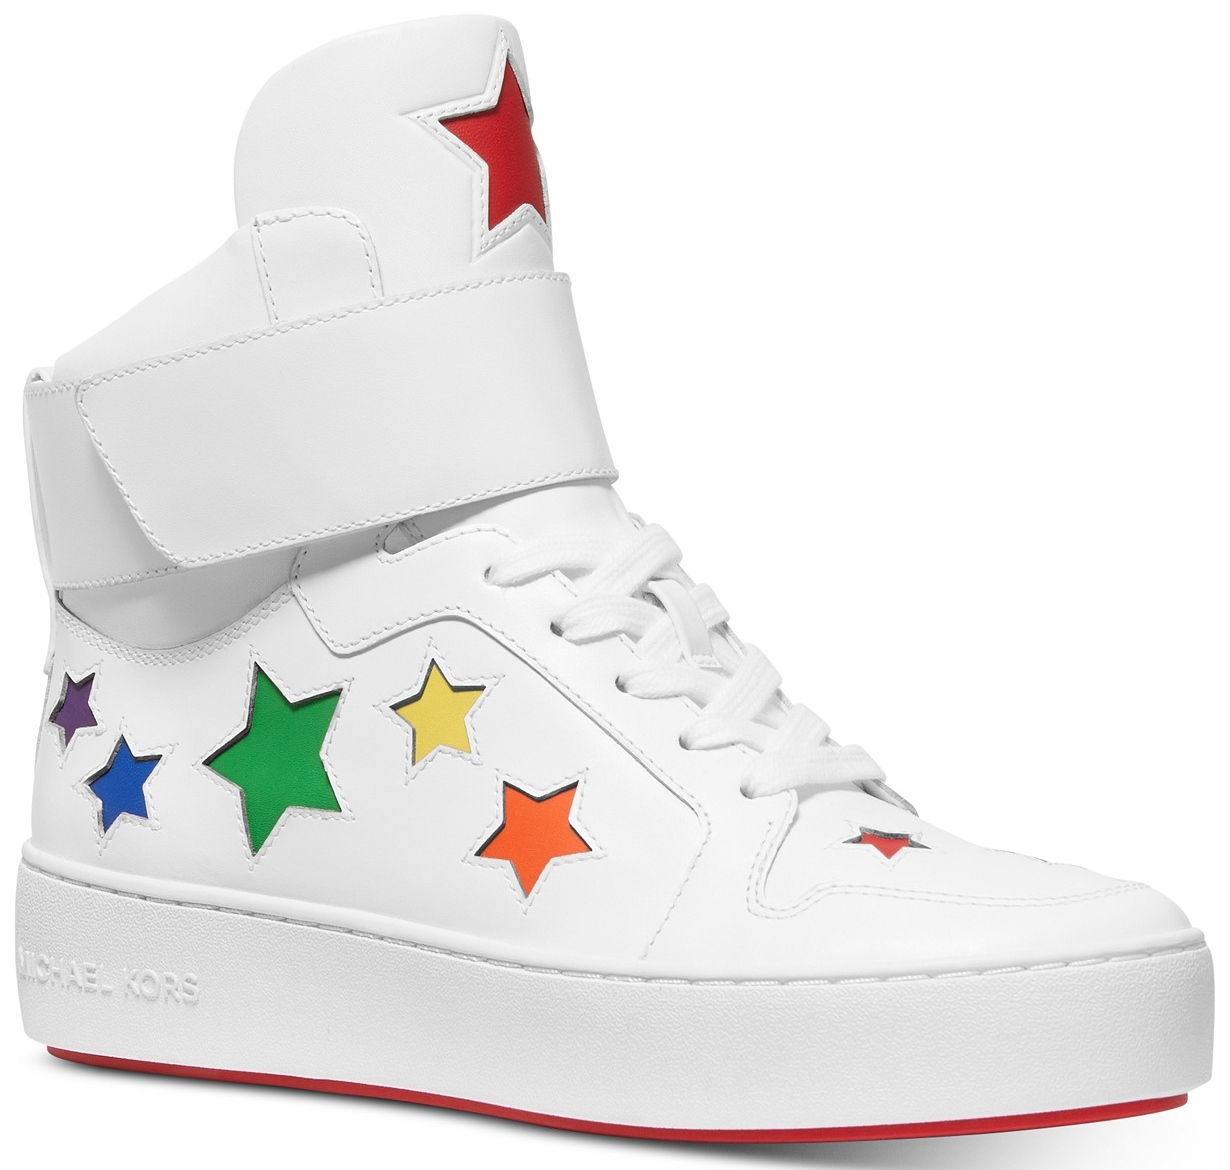 michael kors shoes rainbow